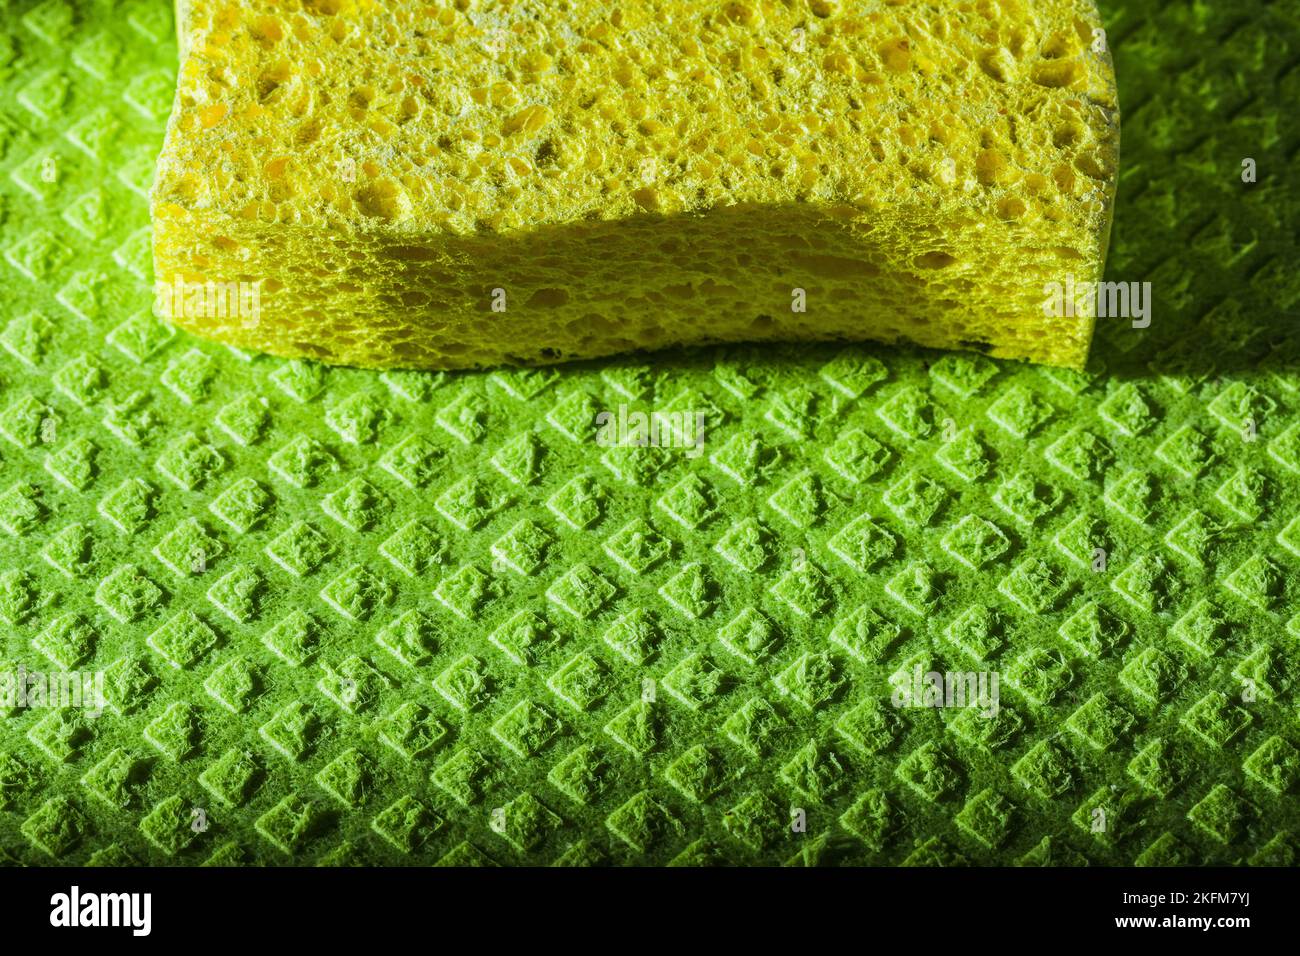 New yellow sponge on green dishcloth. Stock Photo